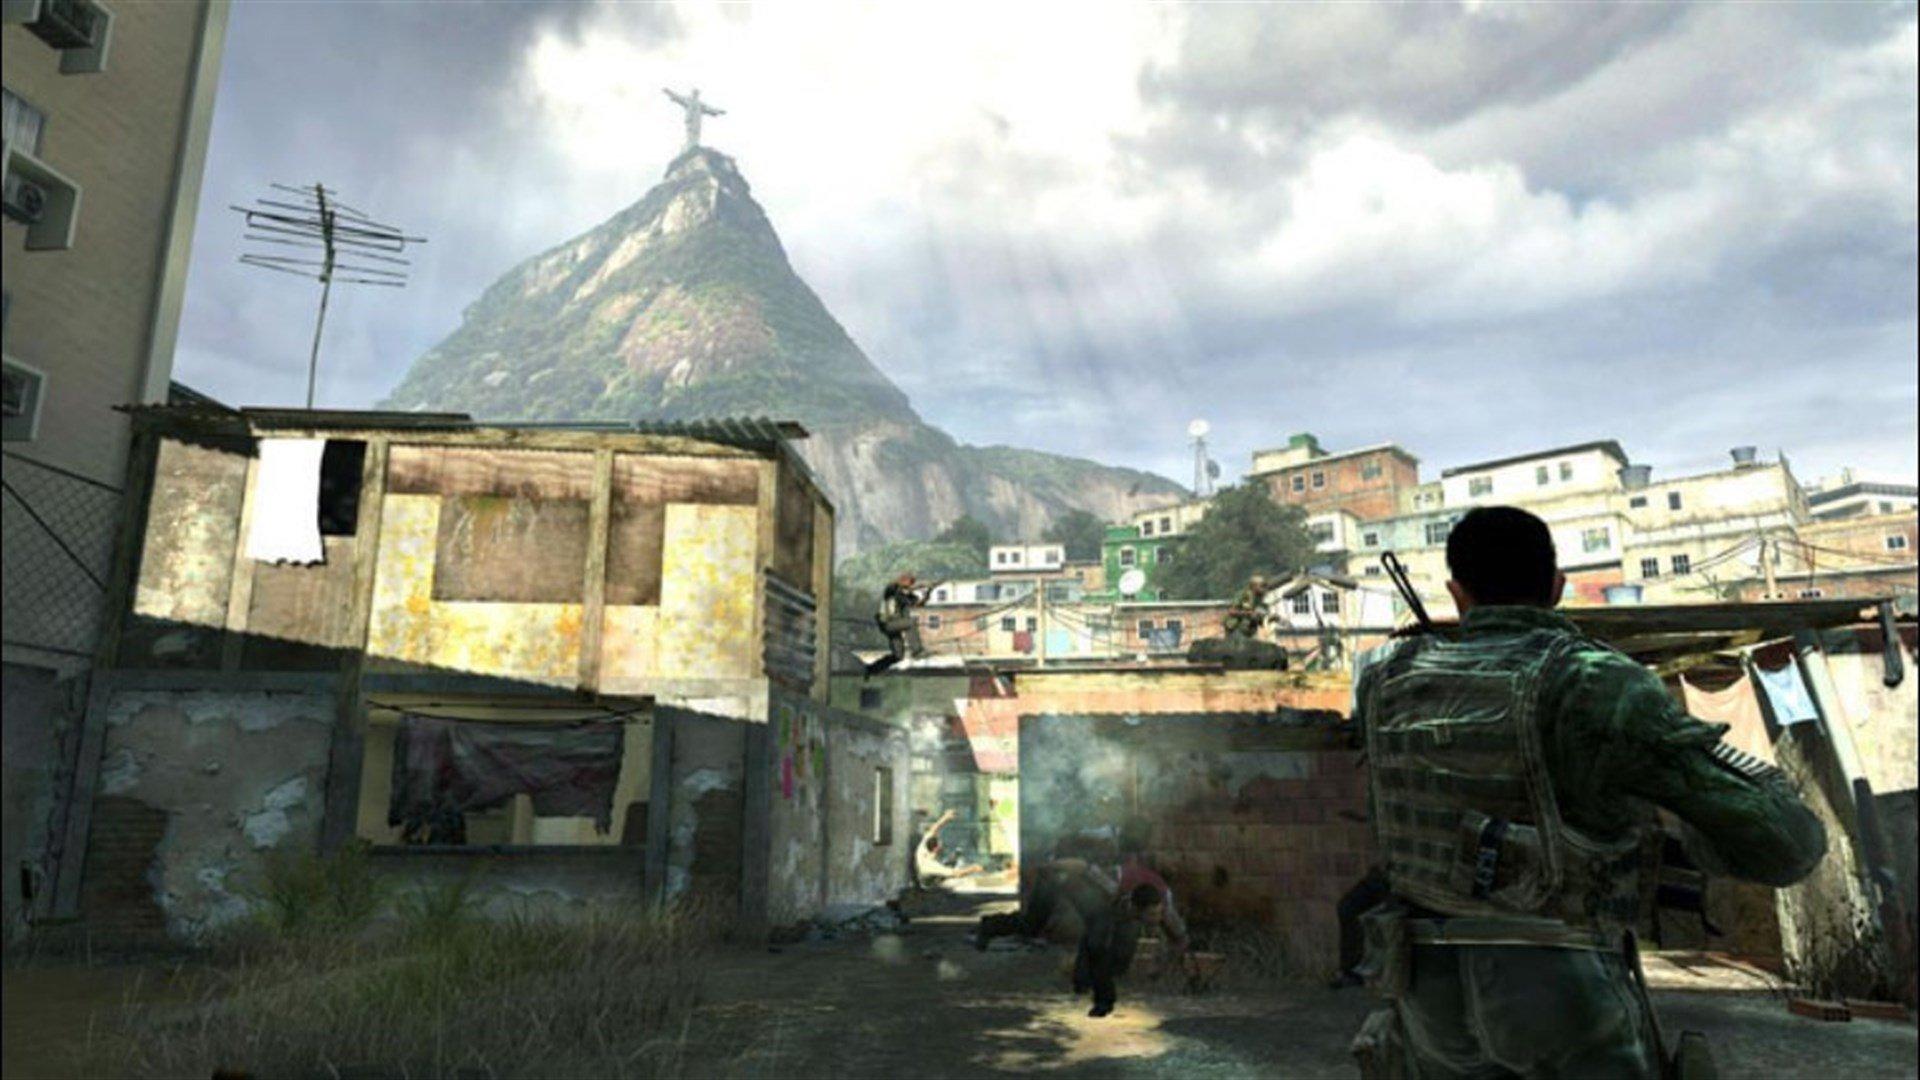 Microsoft Xbox 360 Live Call of Duty Modern Warfare 2 Video Game